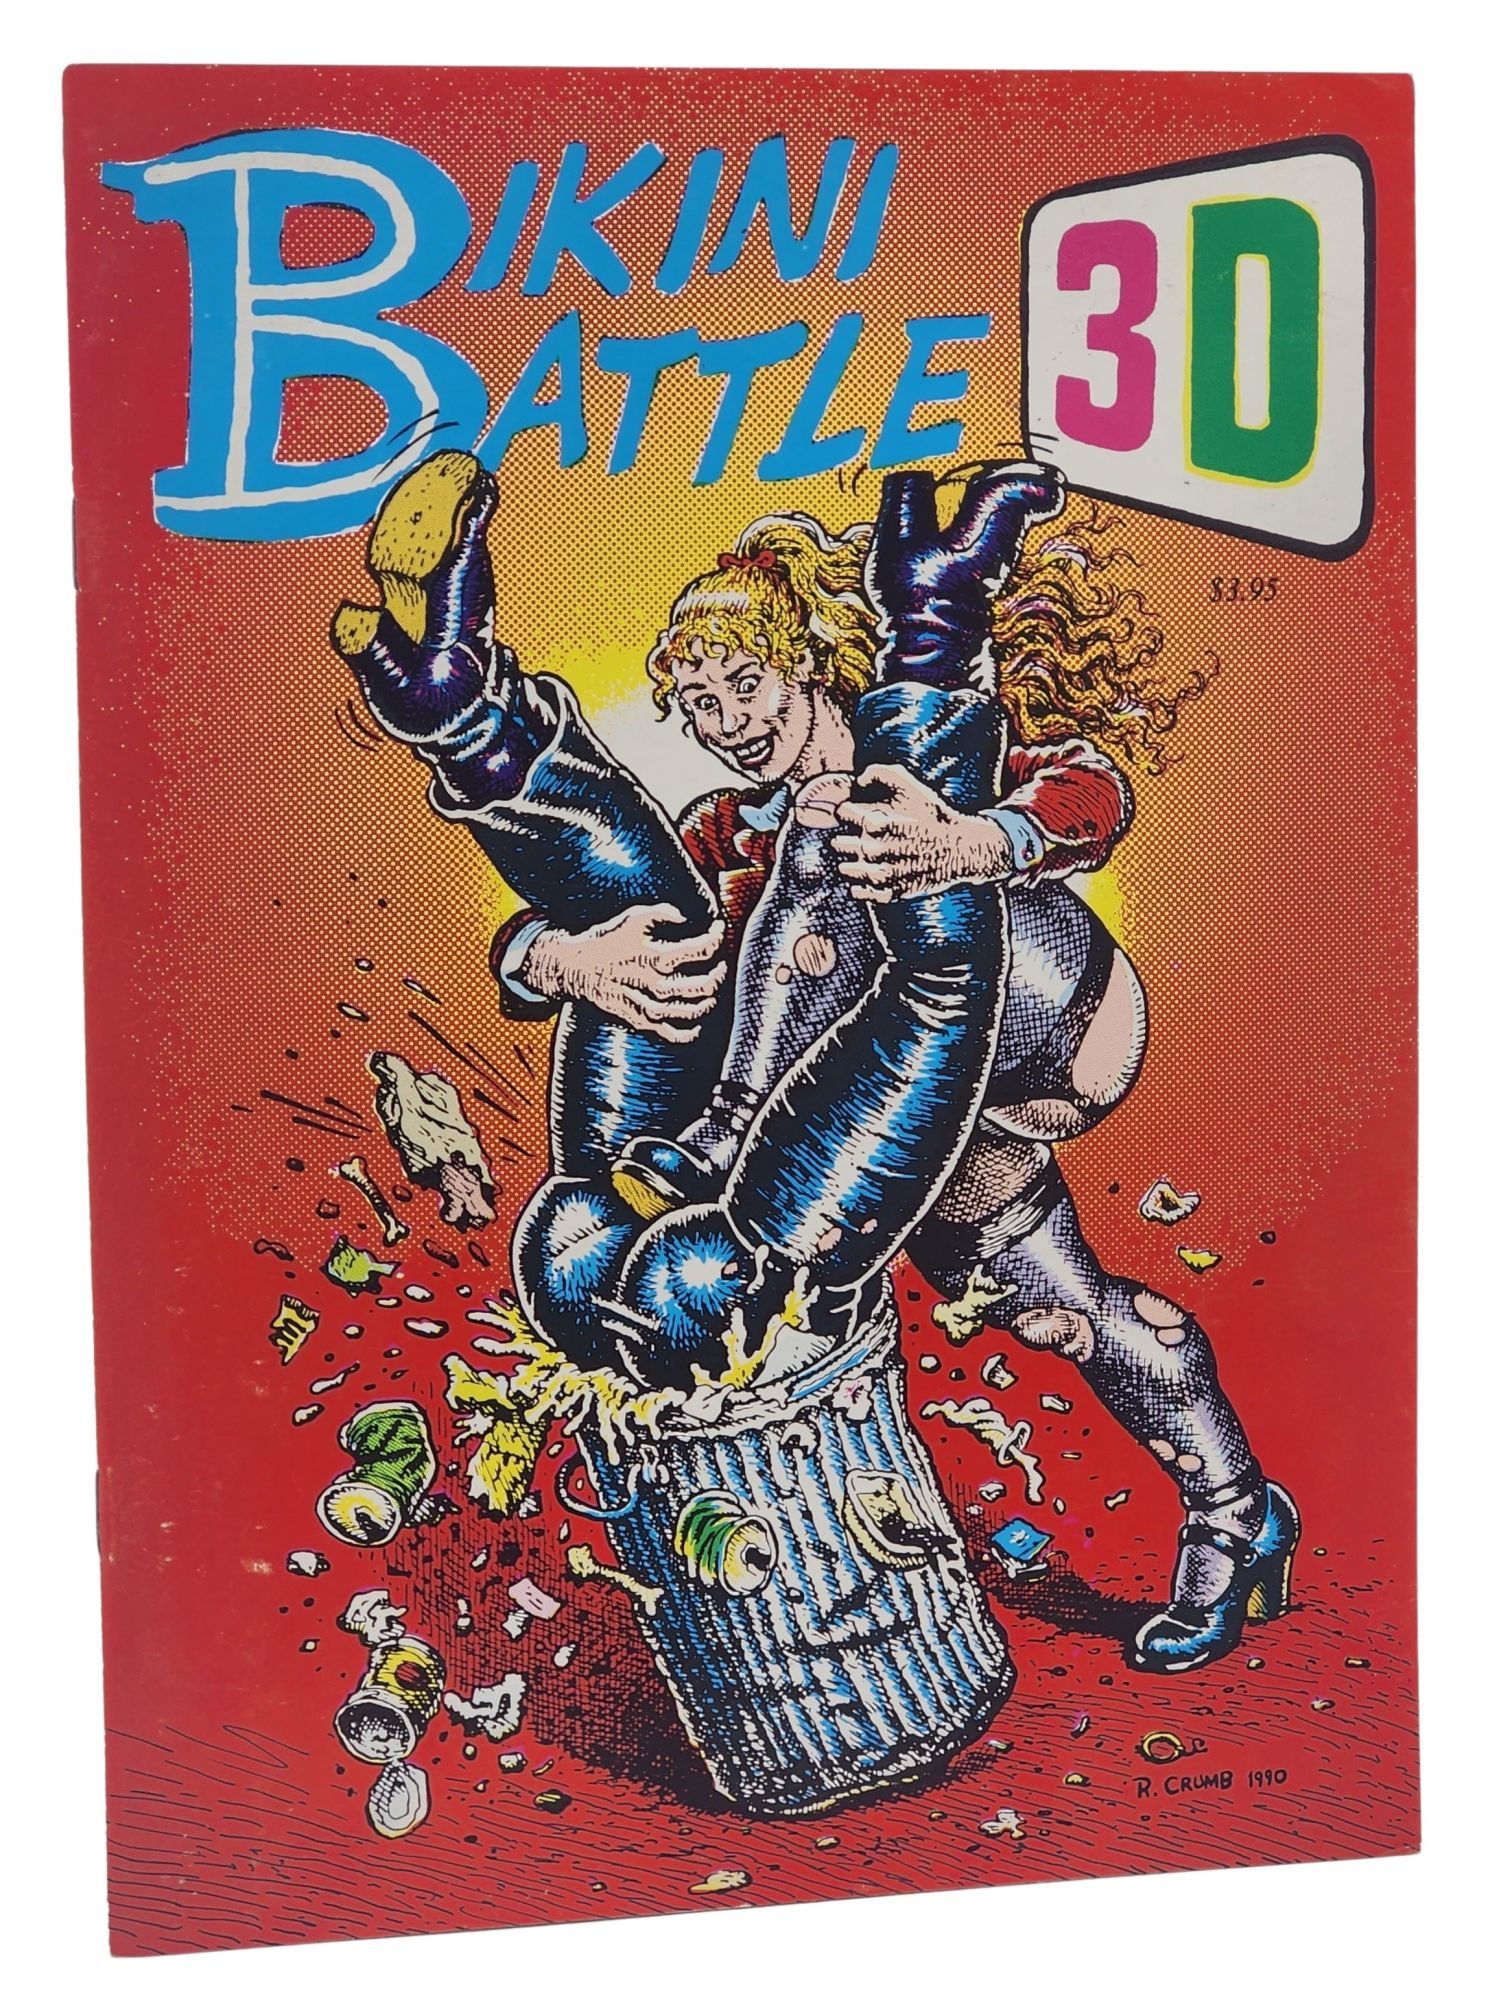 [Book #51047] BIKINI BATTLE 3-D #1. Comic, R. Crumb.